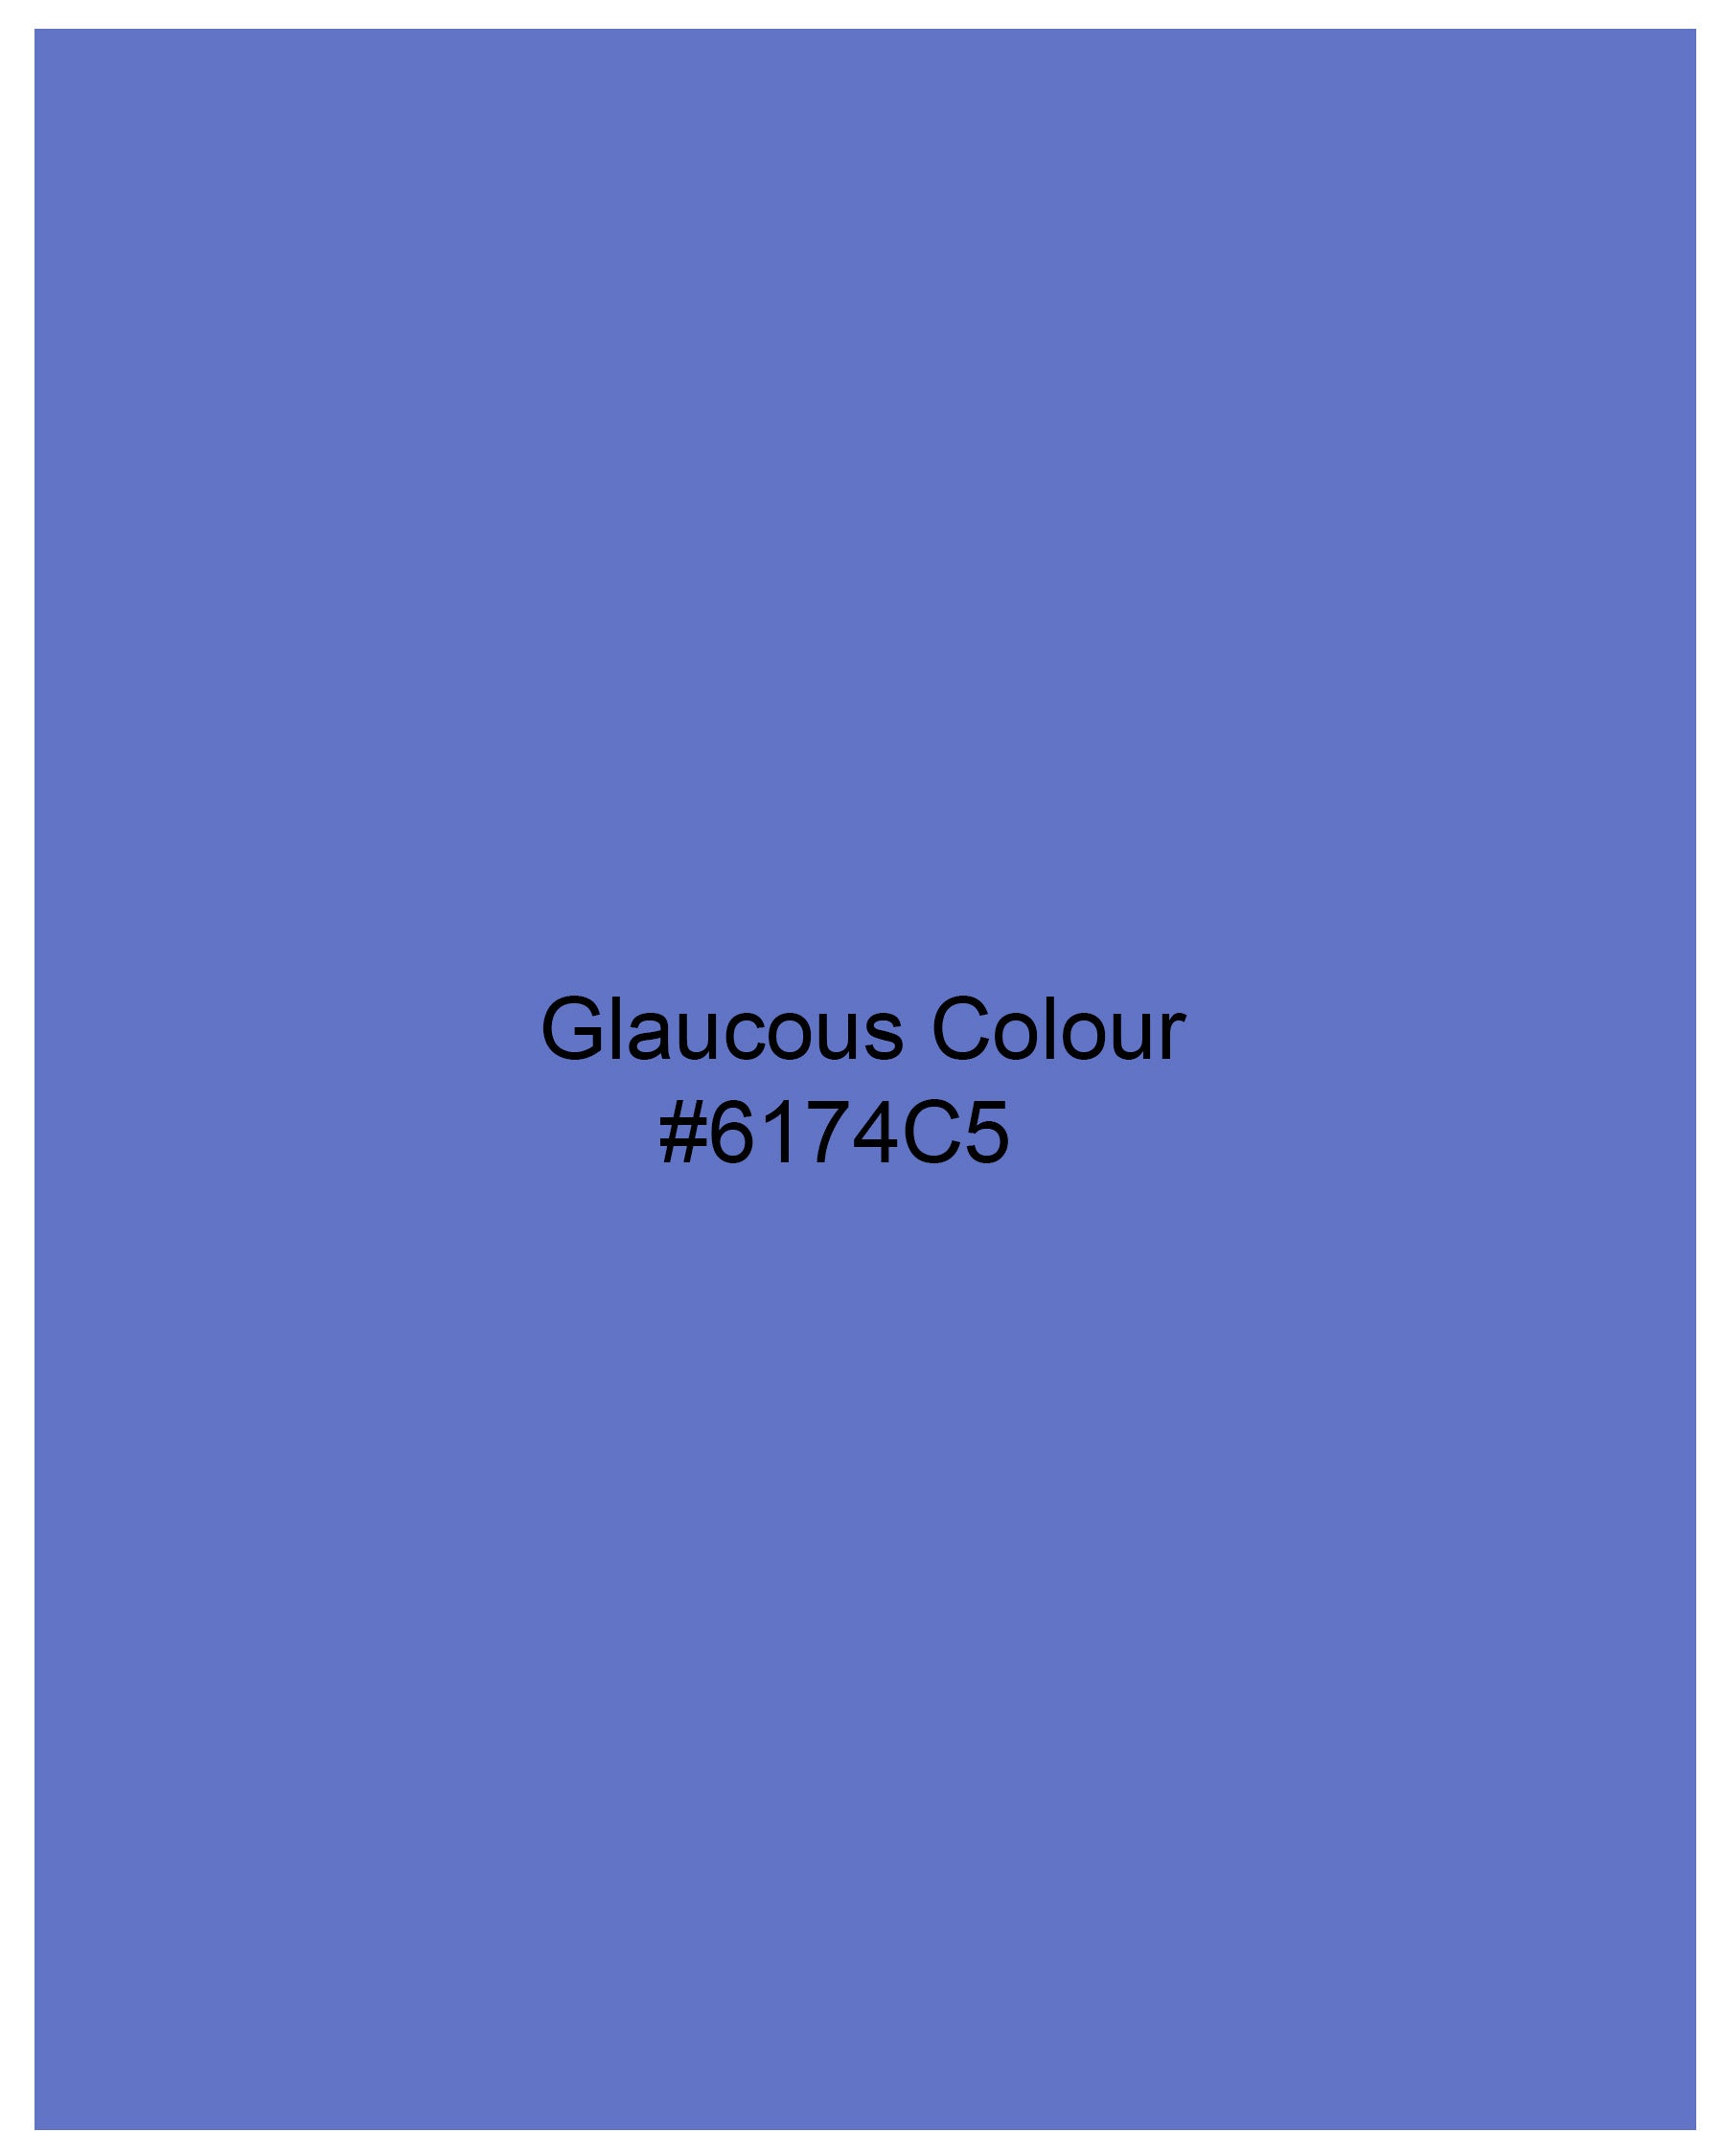 Glaucous Blue Premium Giza Cotton Chambray Shirt 8046-CP-38, 8046-CP-H-38, 8046-CP-39,8046-CP-H-39, 8046-CP-40, 8046-CP-H-40, 8046-CP-42, 8046-CP-H-42, 8046-CP-44, 8046-CP-H-44, 8046-CP-46, 8046-CP-H-46, 8046-CP-48, 8046-CP-H-48, 8046-CP-50, 8046-CP-H-50, 8046-CP-52, 8046-CP-H-52